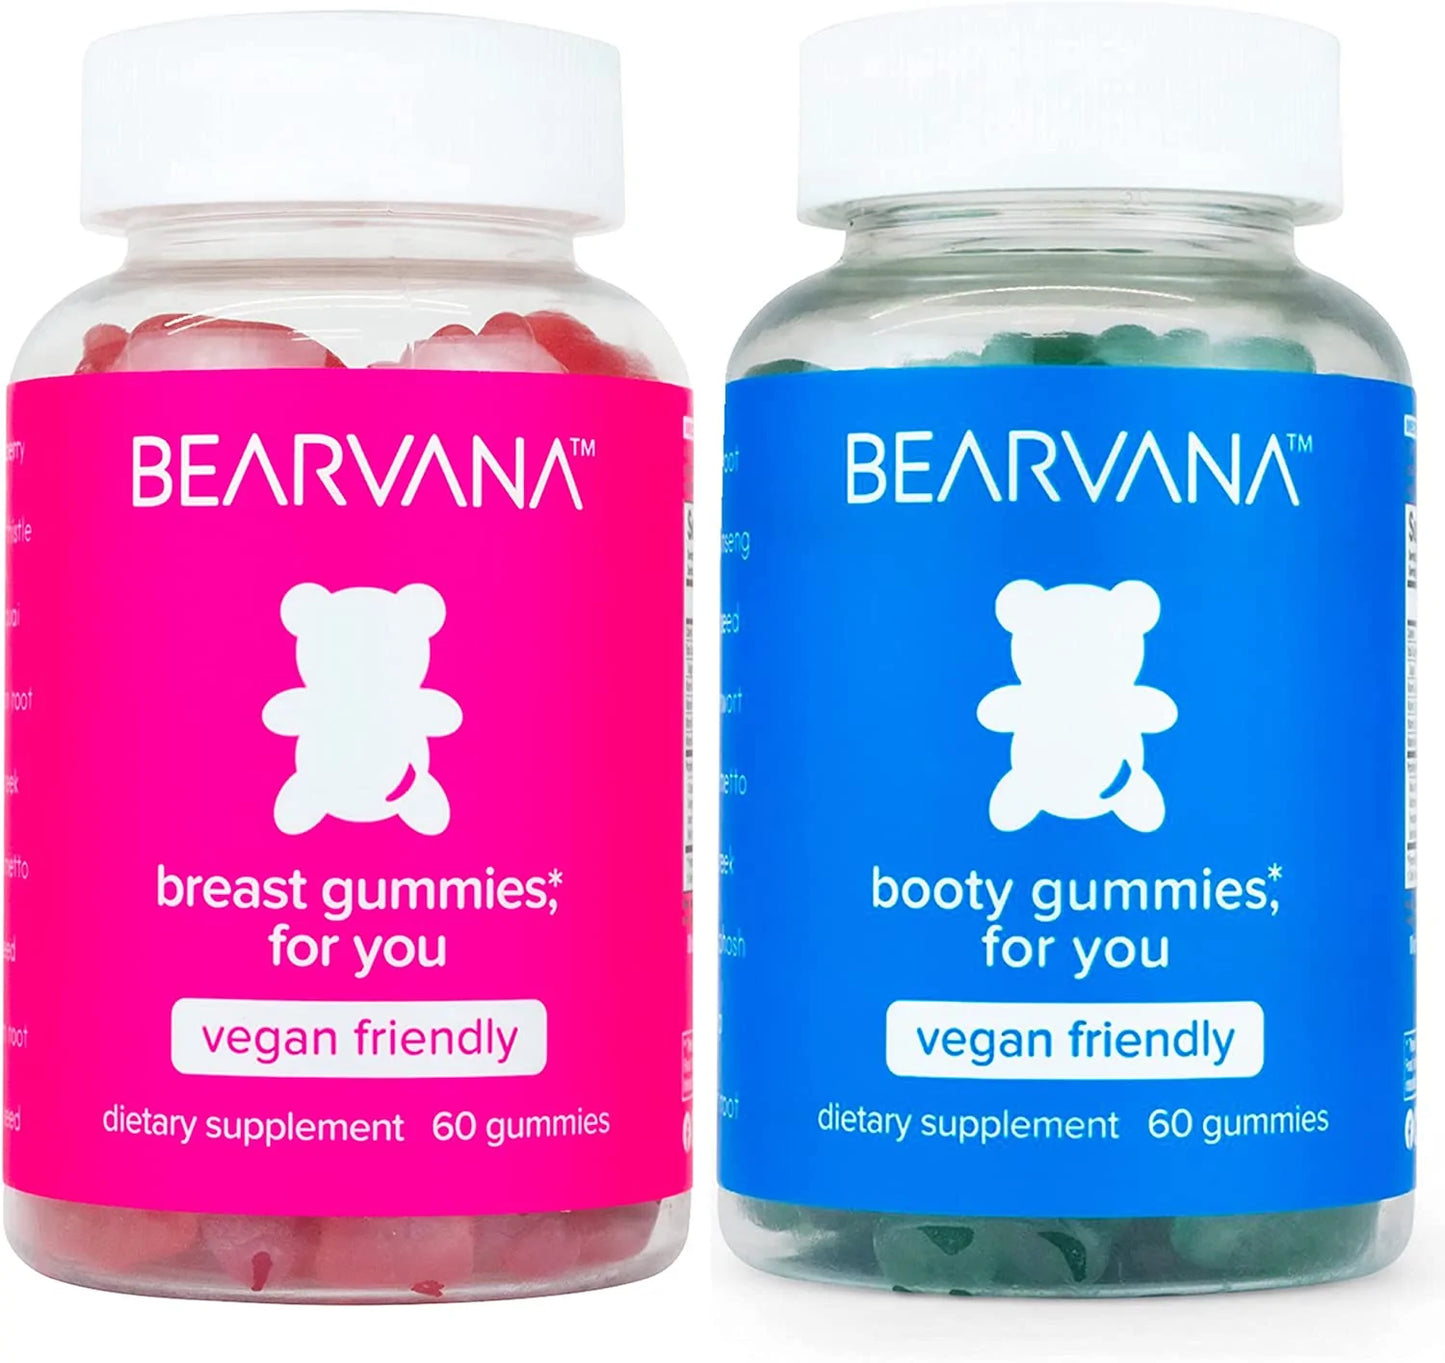 BEARVANA Gummies for You Herbal Blue - Supplement for Women - Delicious Berry Gummy Pills - 60 Gummies